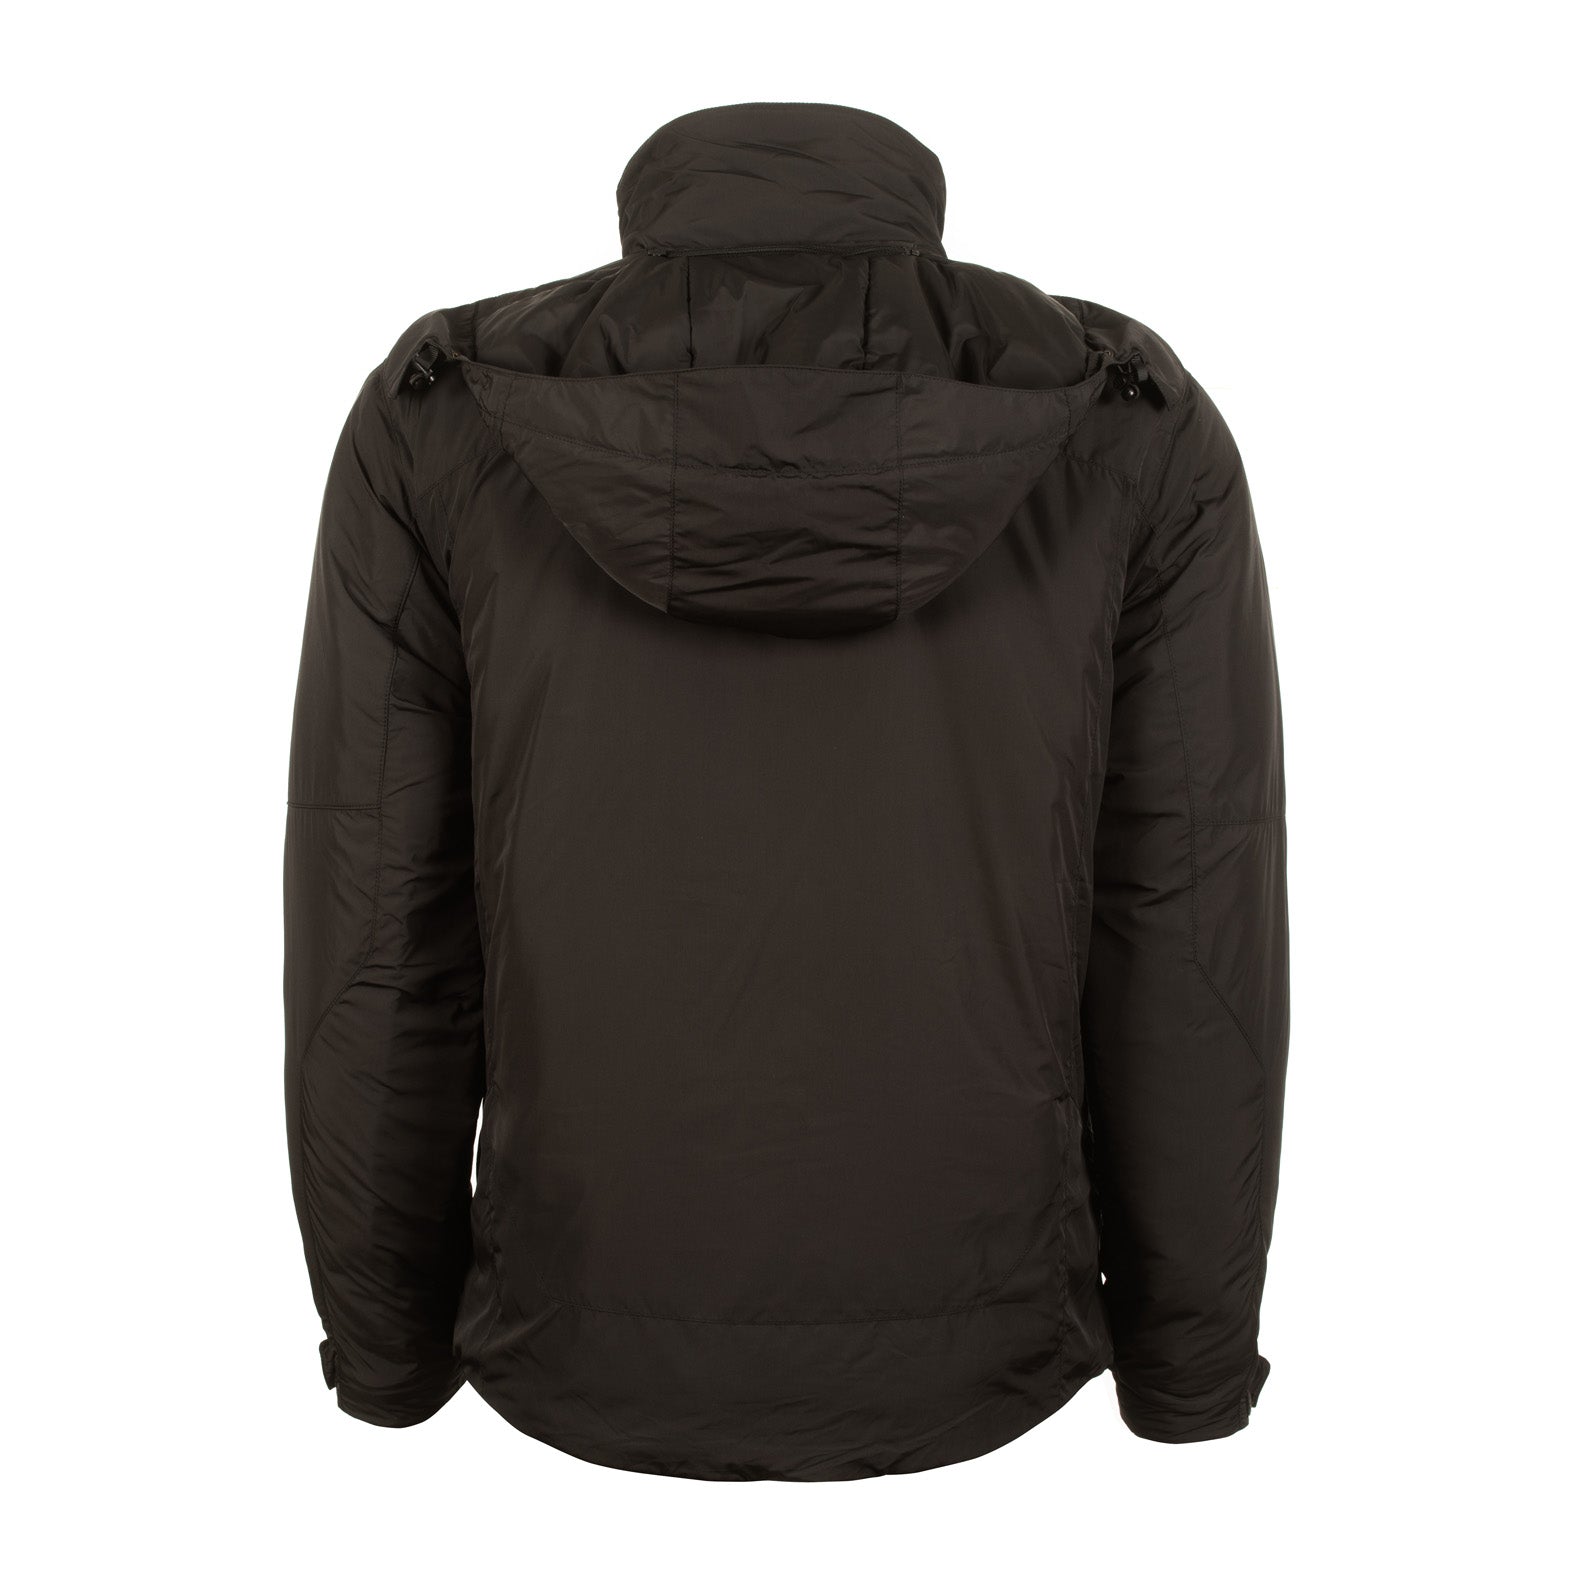 Snugpak Arrowhead Technical Insulated Jacket